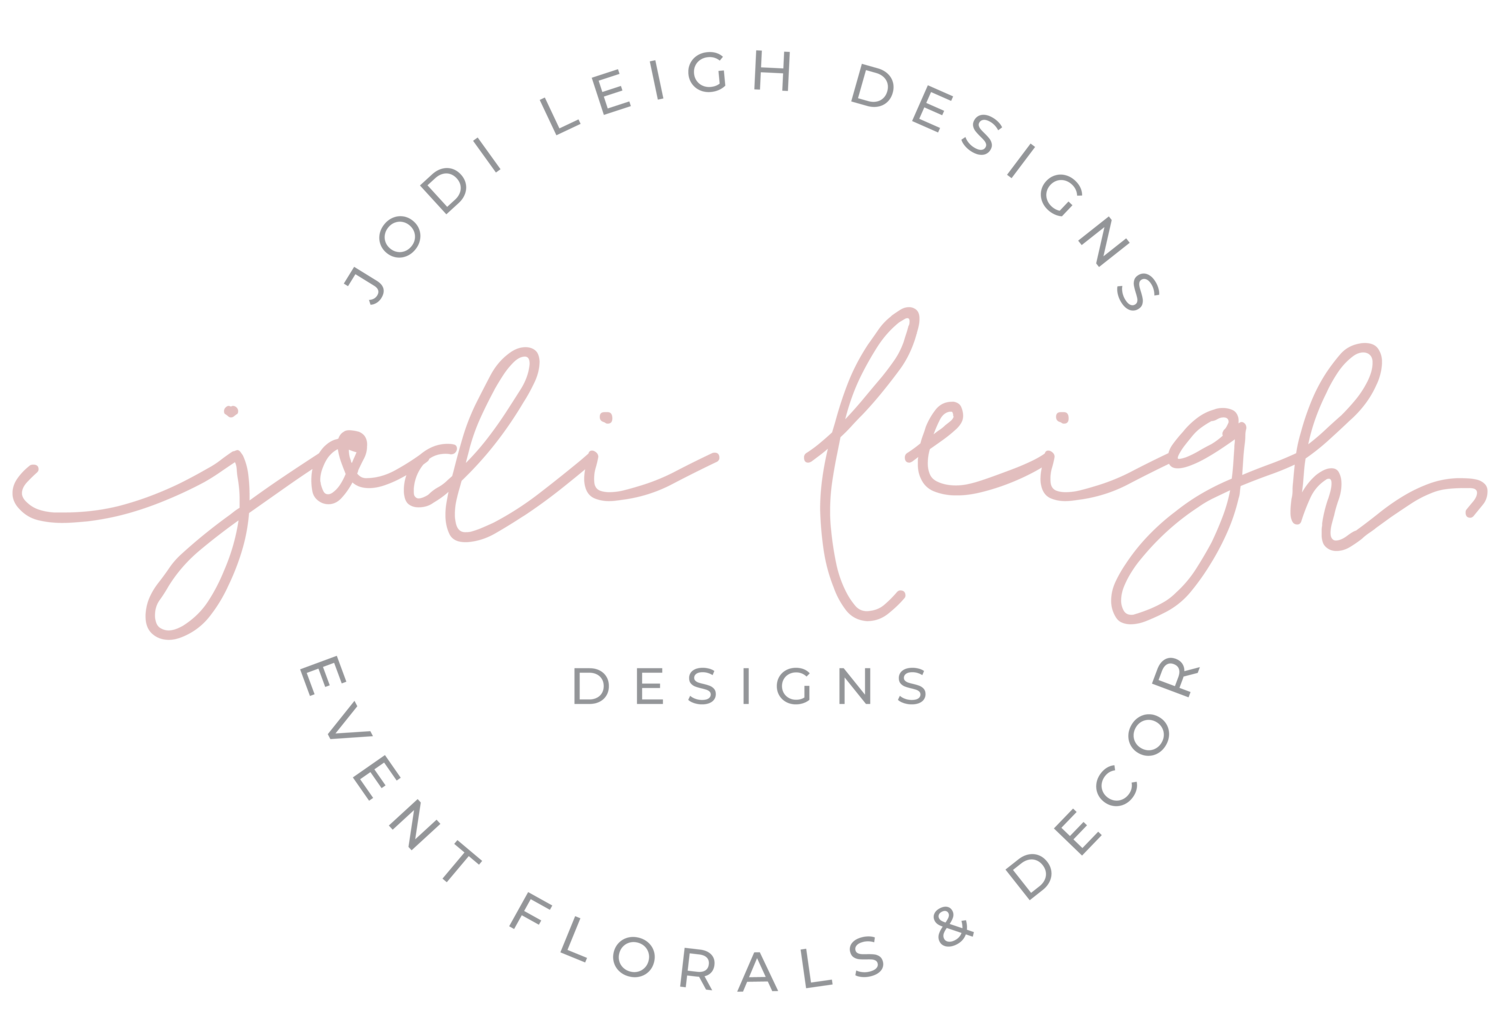 Jodi Leigh Designs